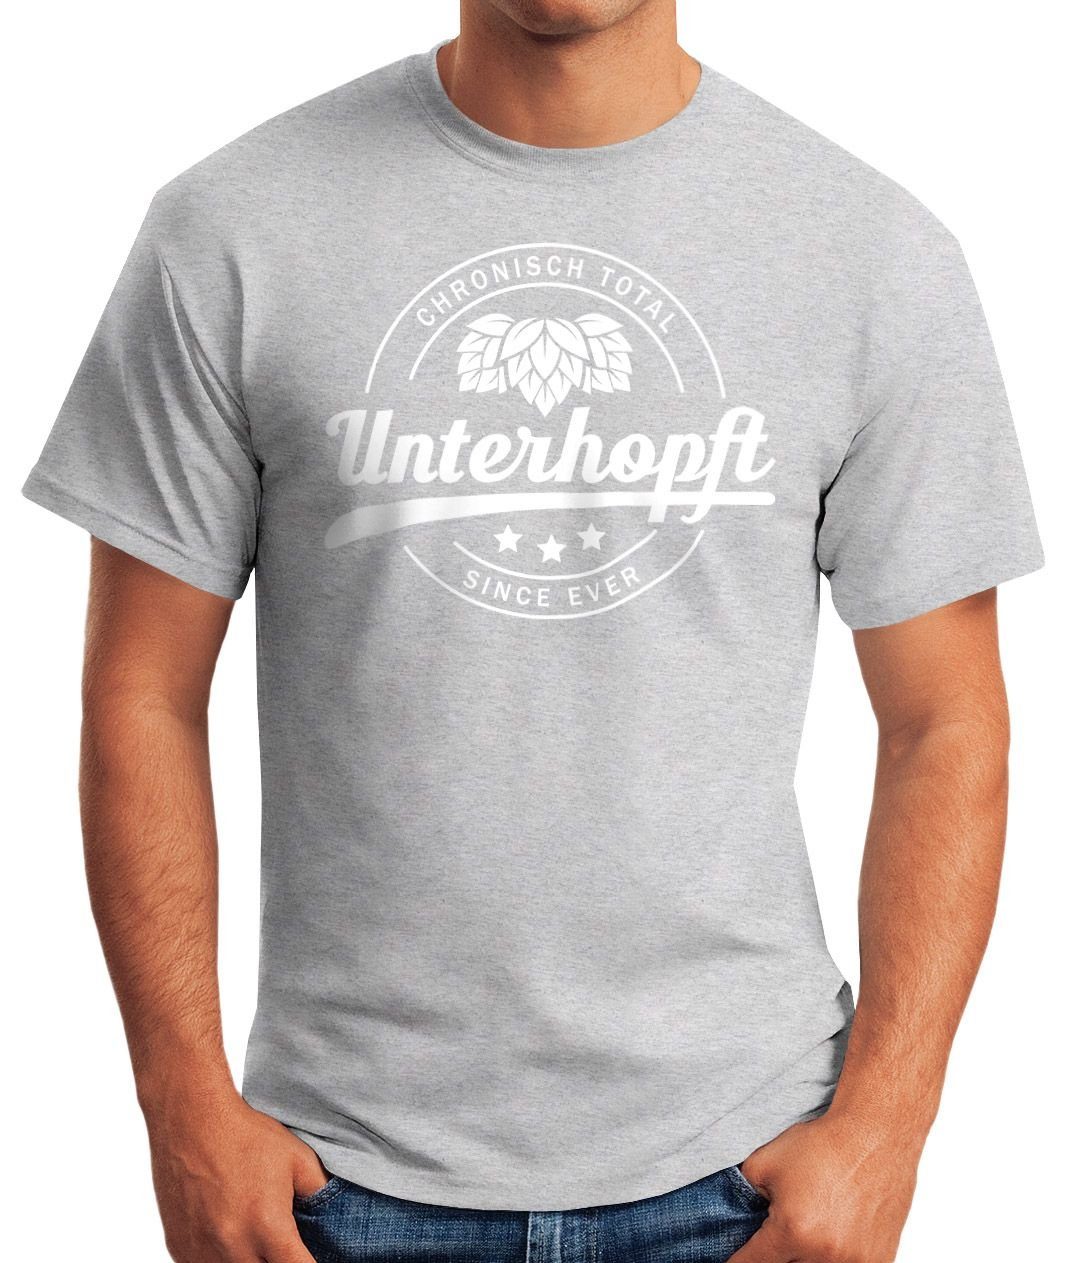 Herren Total Fun-Shirt Print Print-Shirt grau mit Chronisch Unterhopft MoonWorks Since Ever T-Shirt Moonworks®